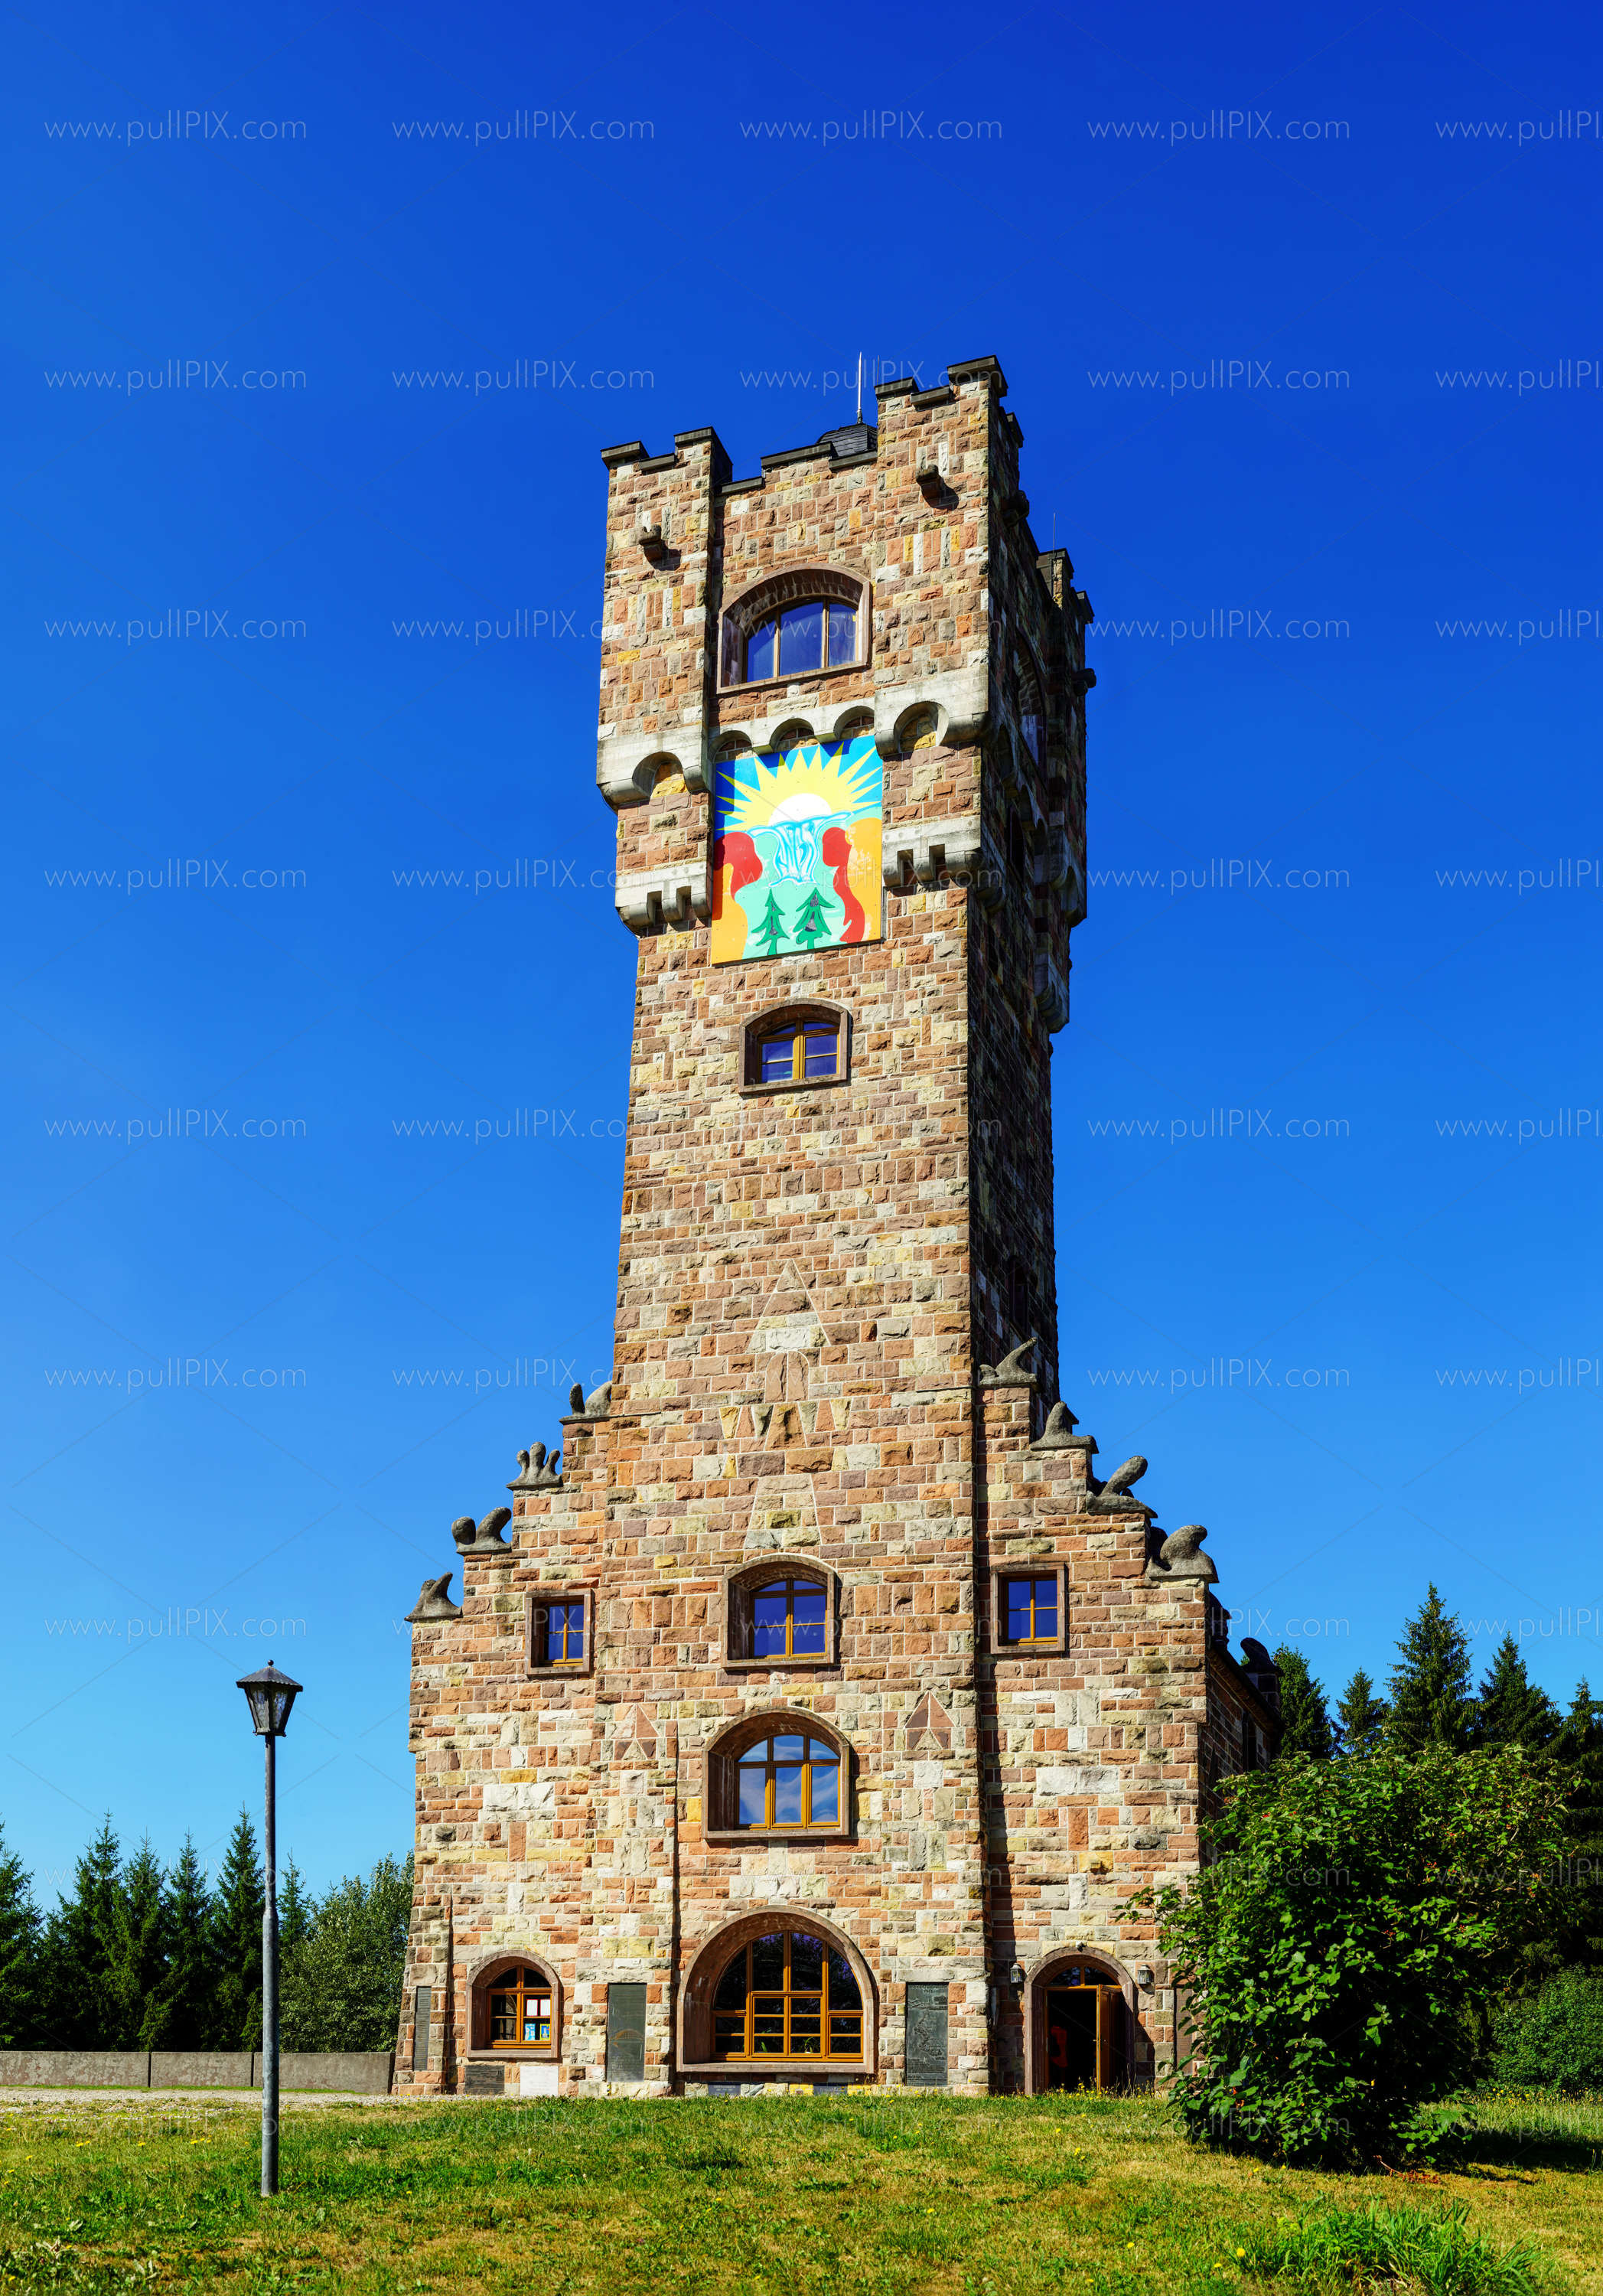 Preview Altvaterturm 2b.jpg